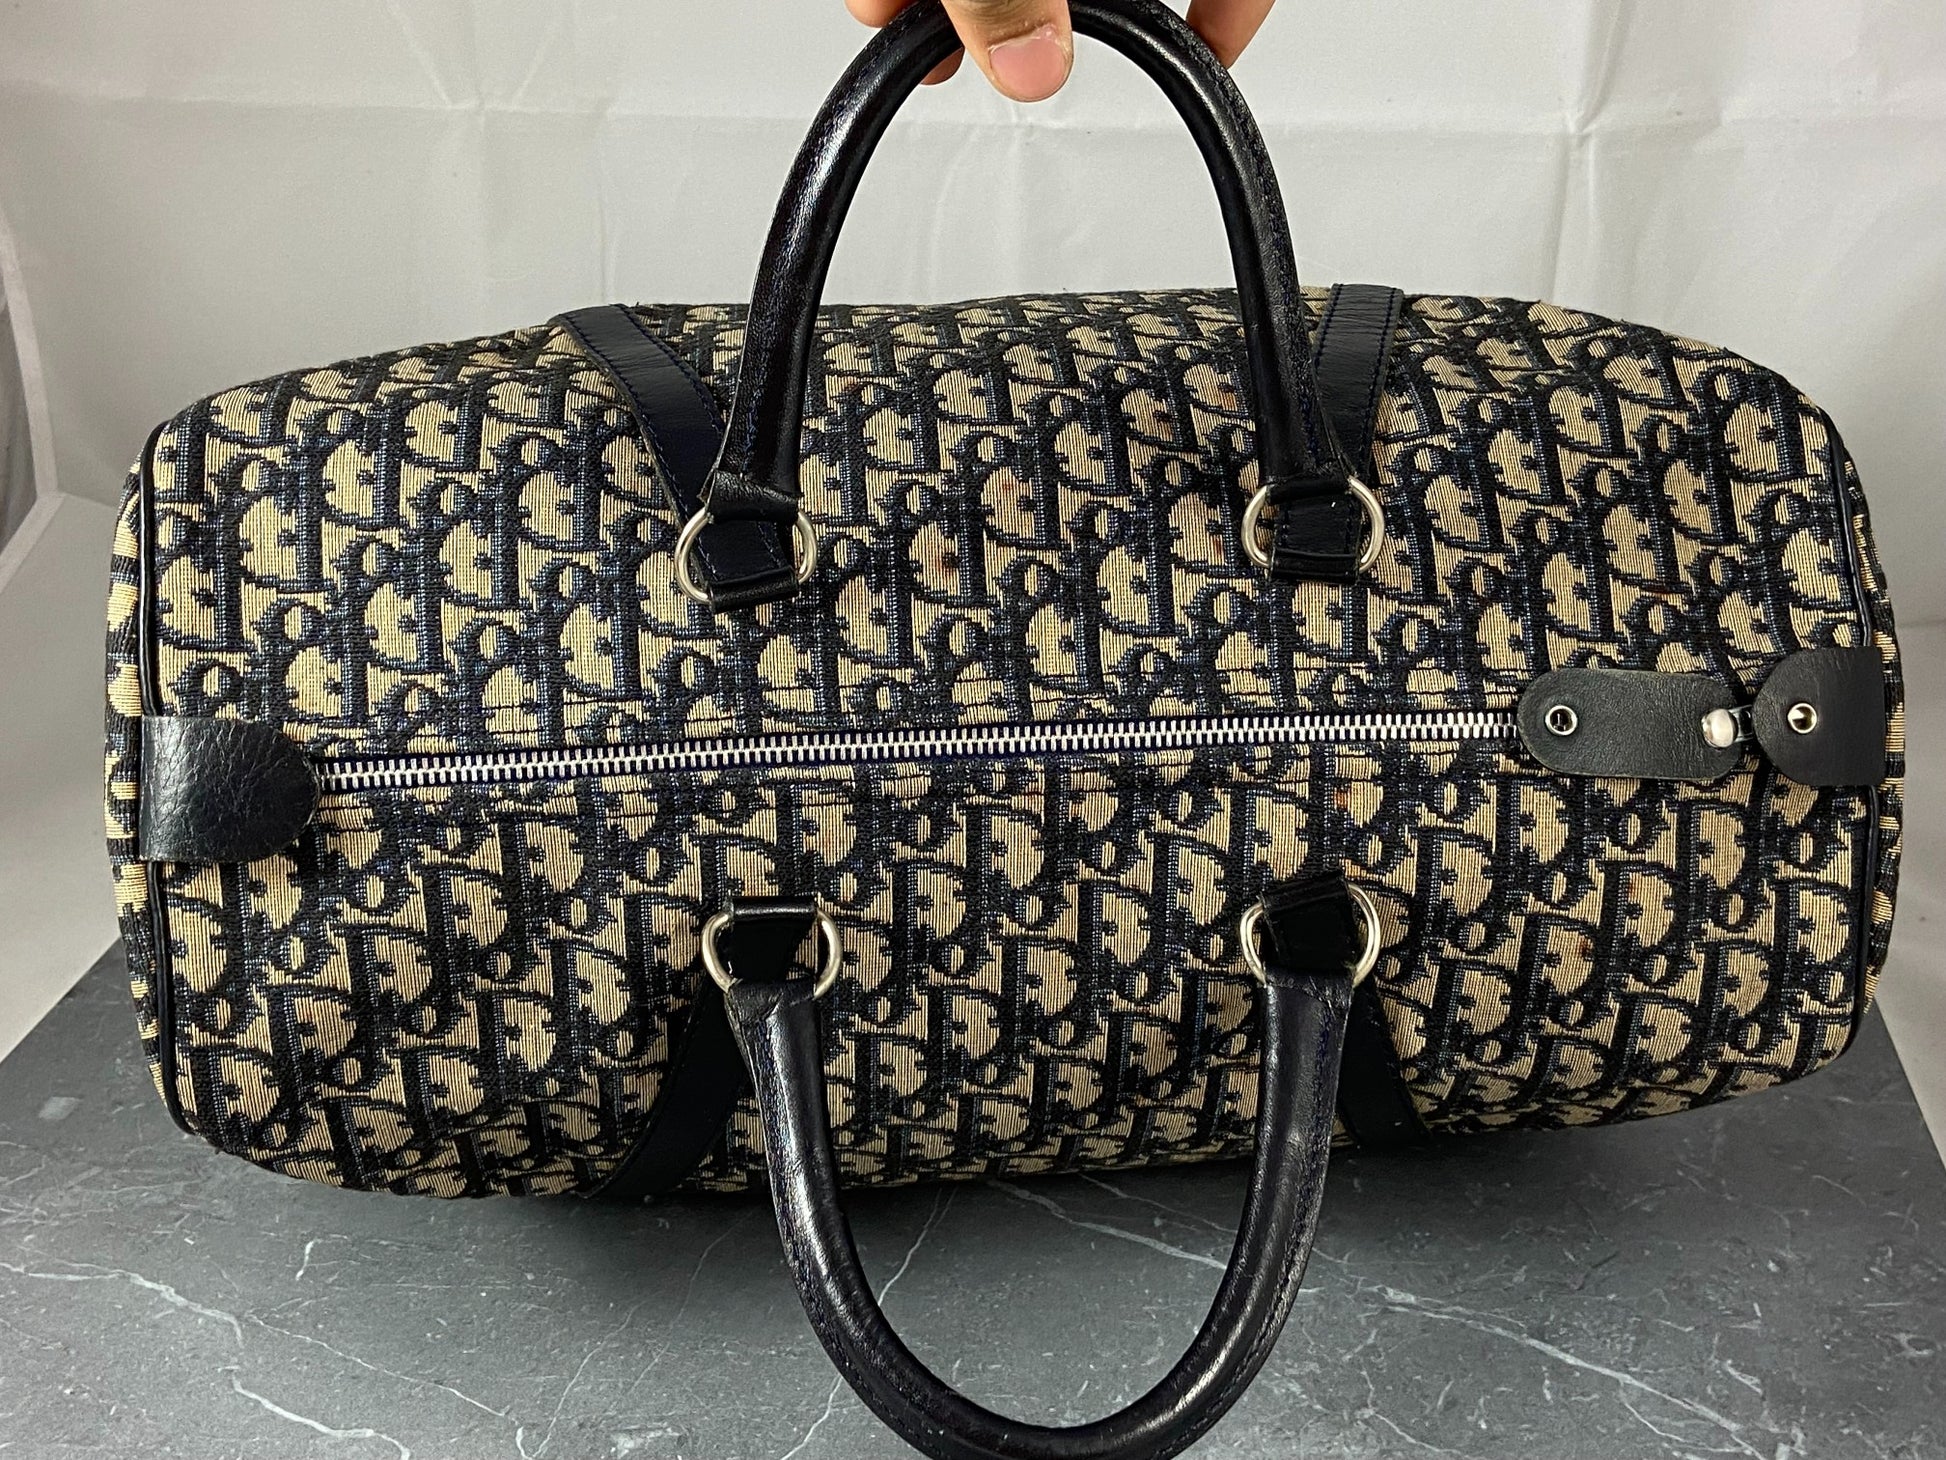 Dior Brown Monogram Trotter Luggage Briefcase Suitcase Duffle 820da94